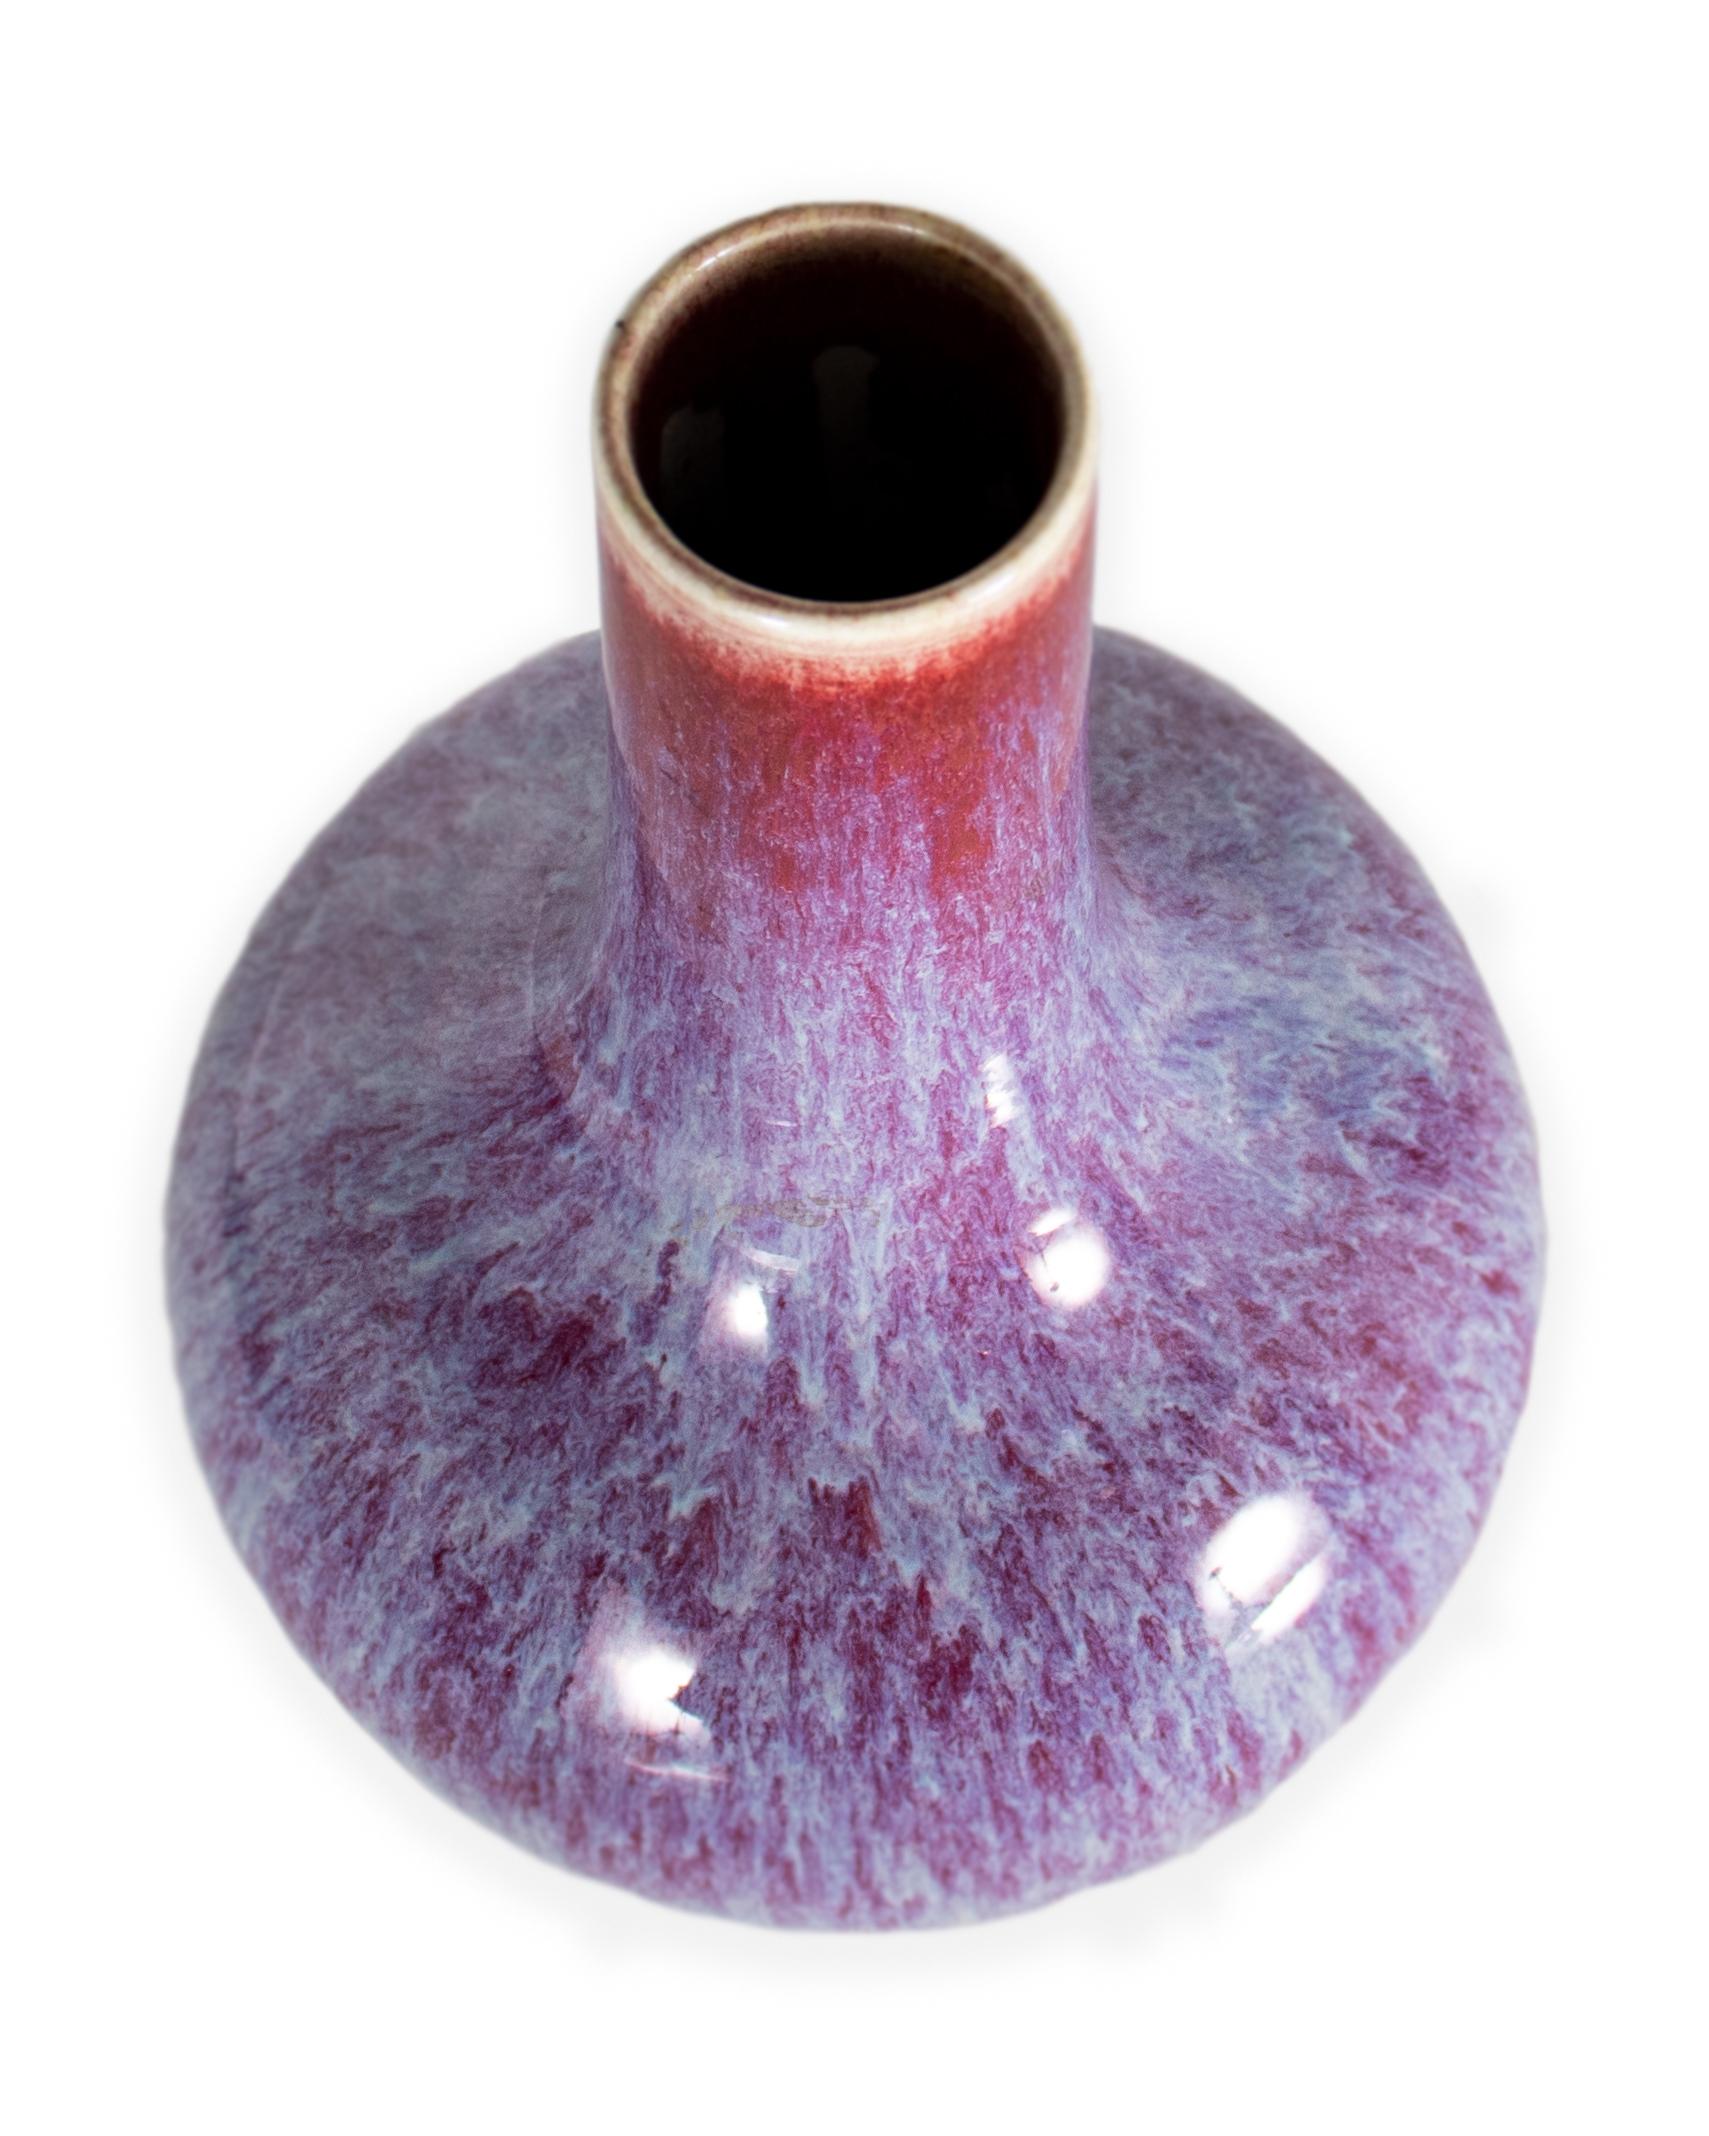 Other Variegated Oxblood Glaze Chinese Vase For Sale